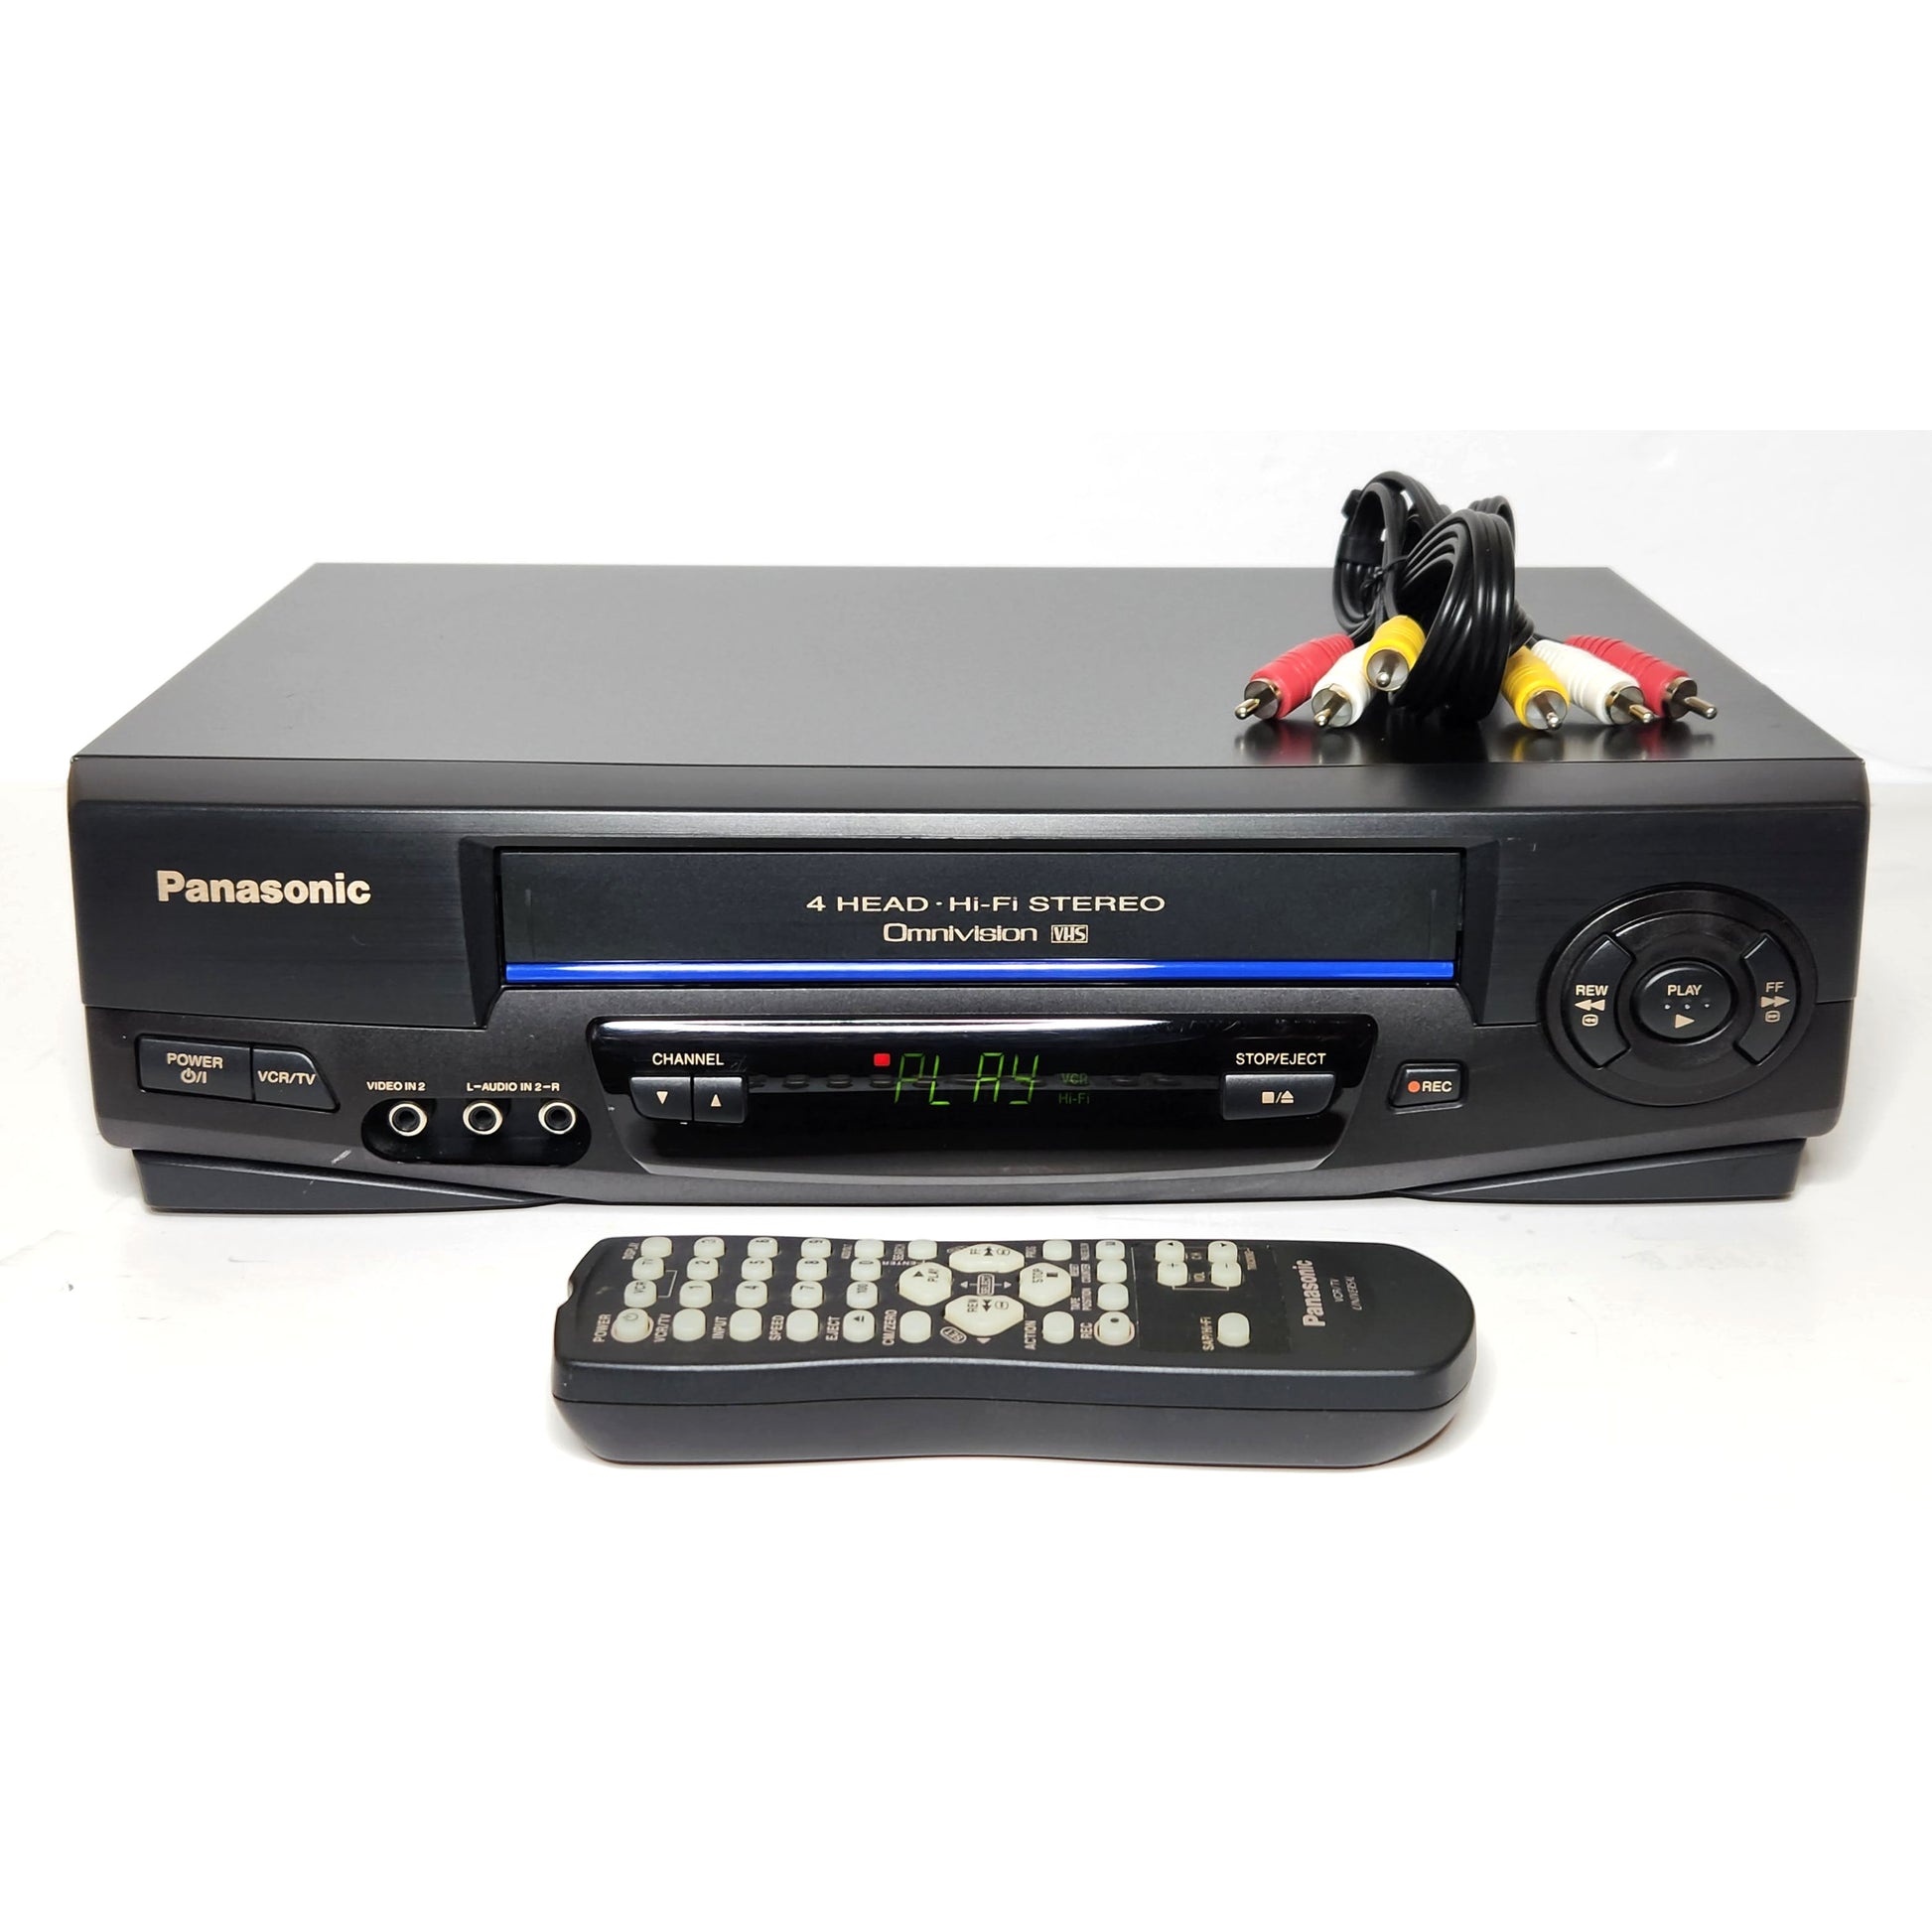 Panasonic PV-V4521 Omnivision VCR, 4-Head Hi-Fi Stereo